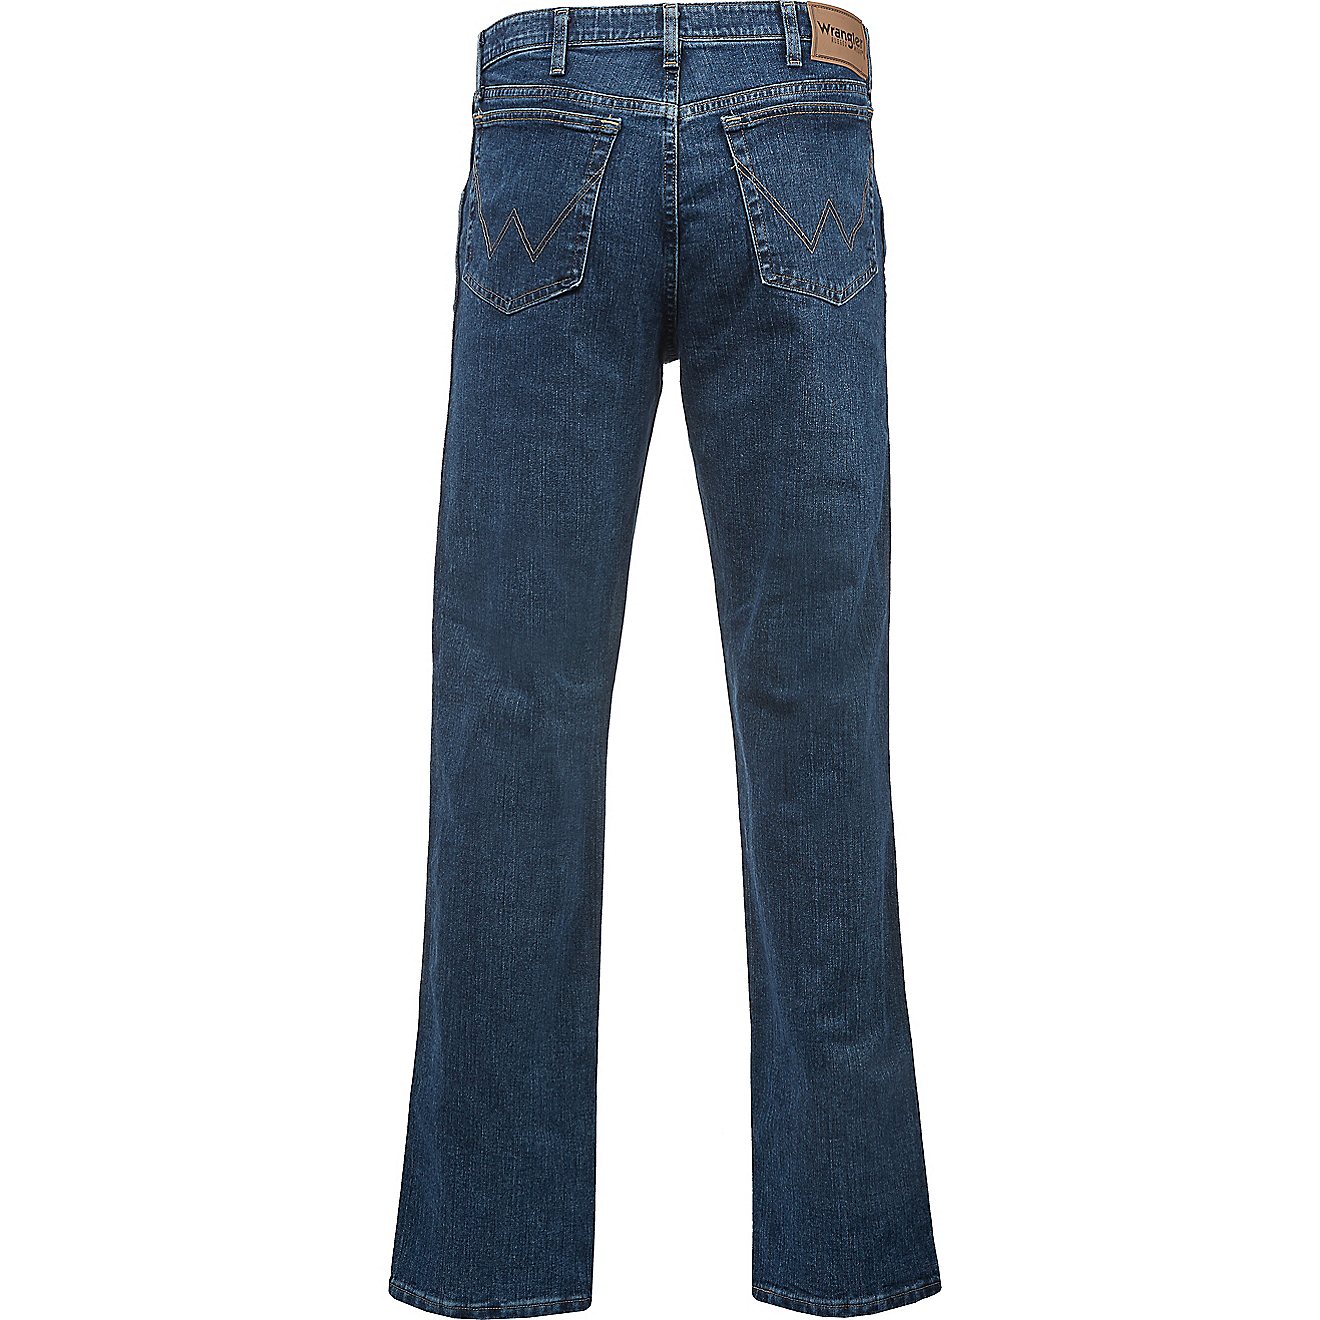 Wrangler Men's Performance Series 5 Pocket Jeans | Academy